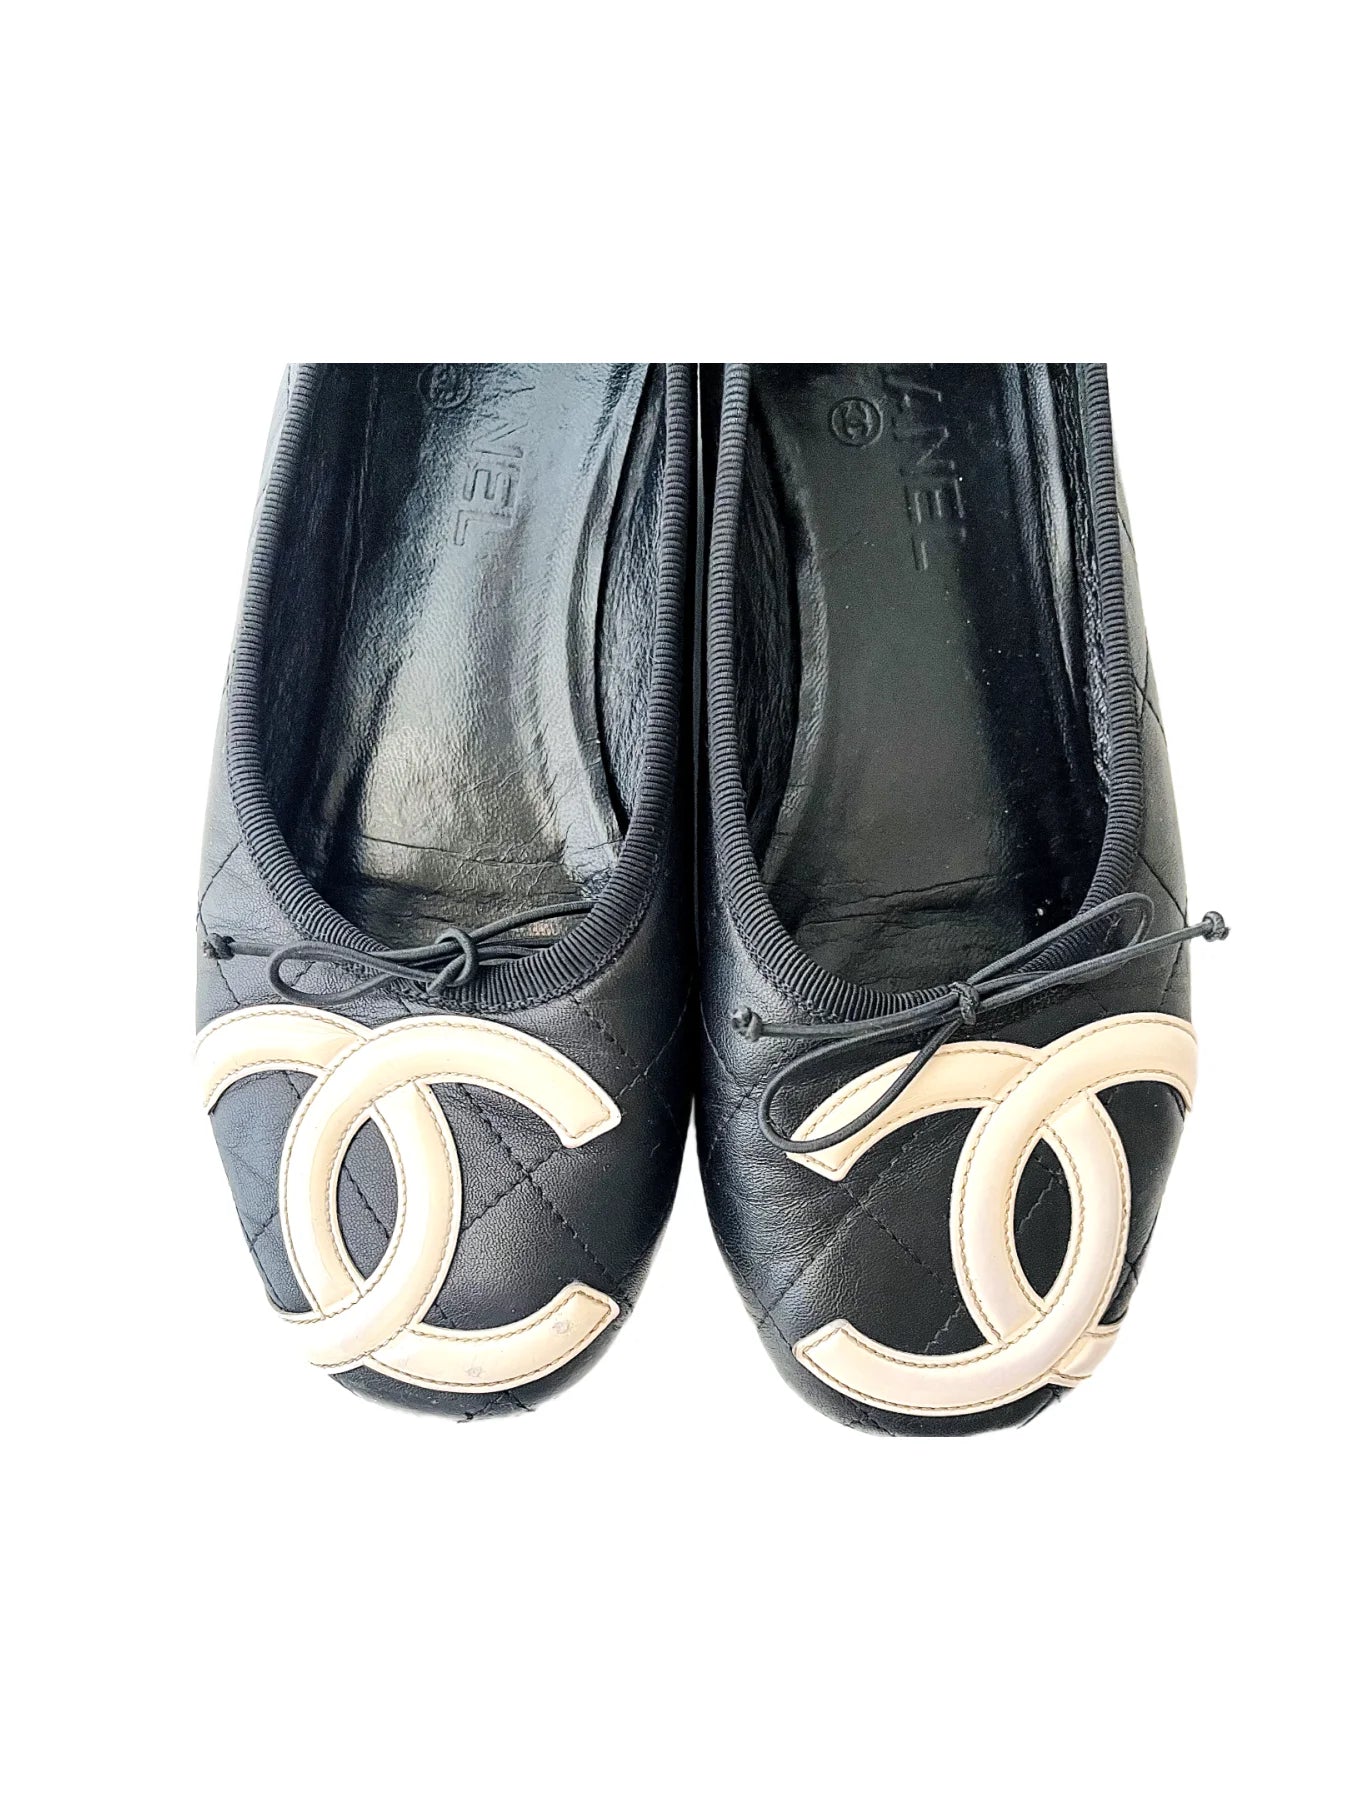 Chanel Beige/Black Leather CC Cap-Toe Bow Ballet Flats Size 38 Chanel